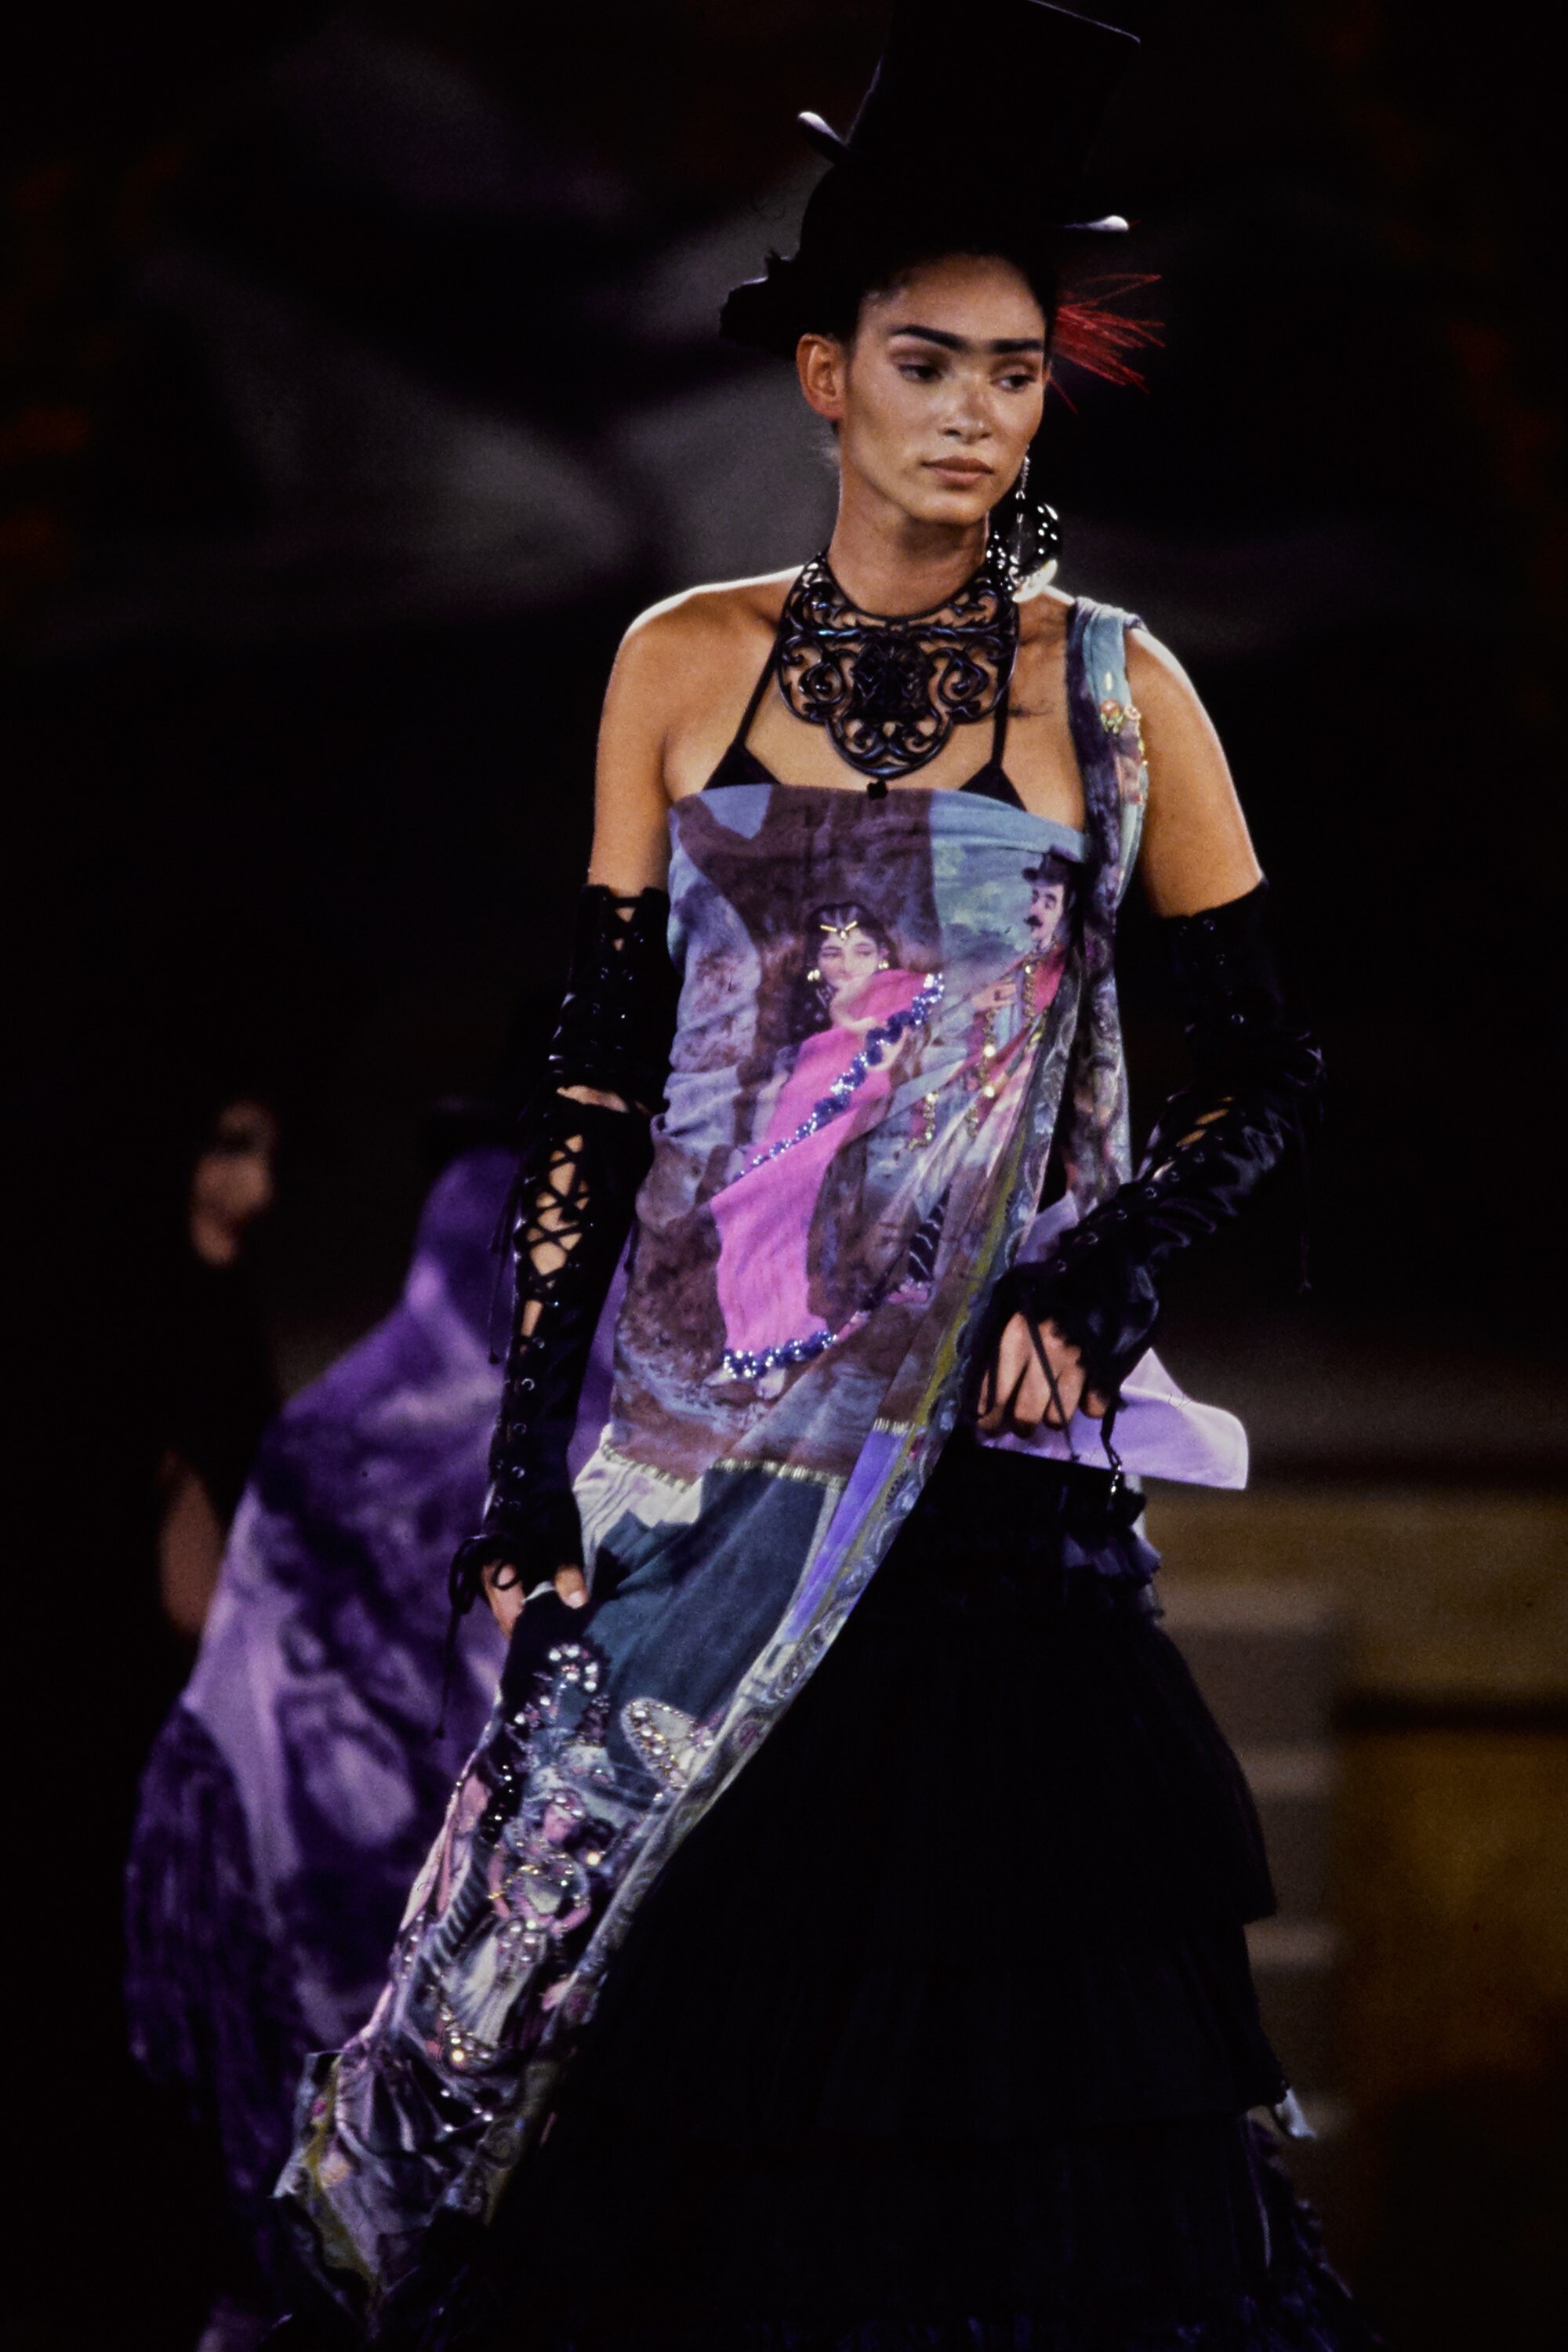 JEAN LOUIS SCHERRER #4 HC SS 1999 Paris - Fashion Channel 